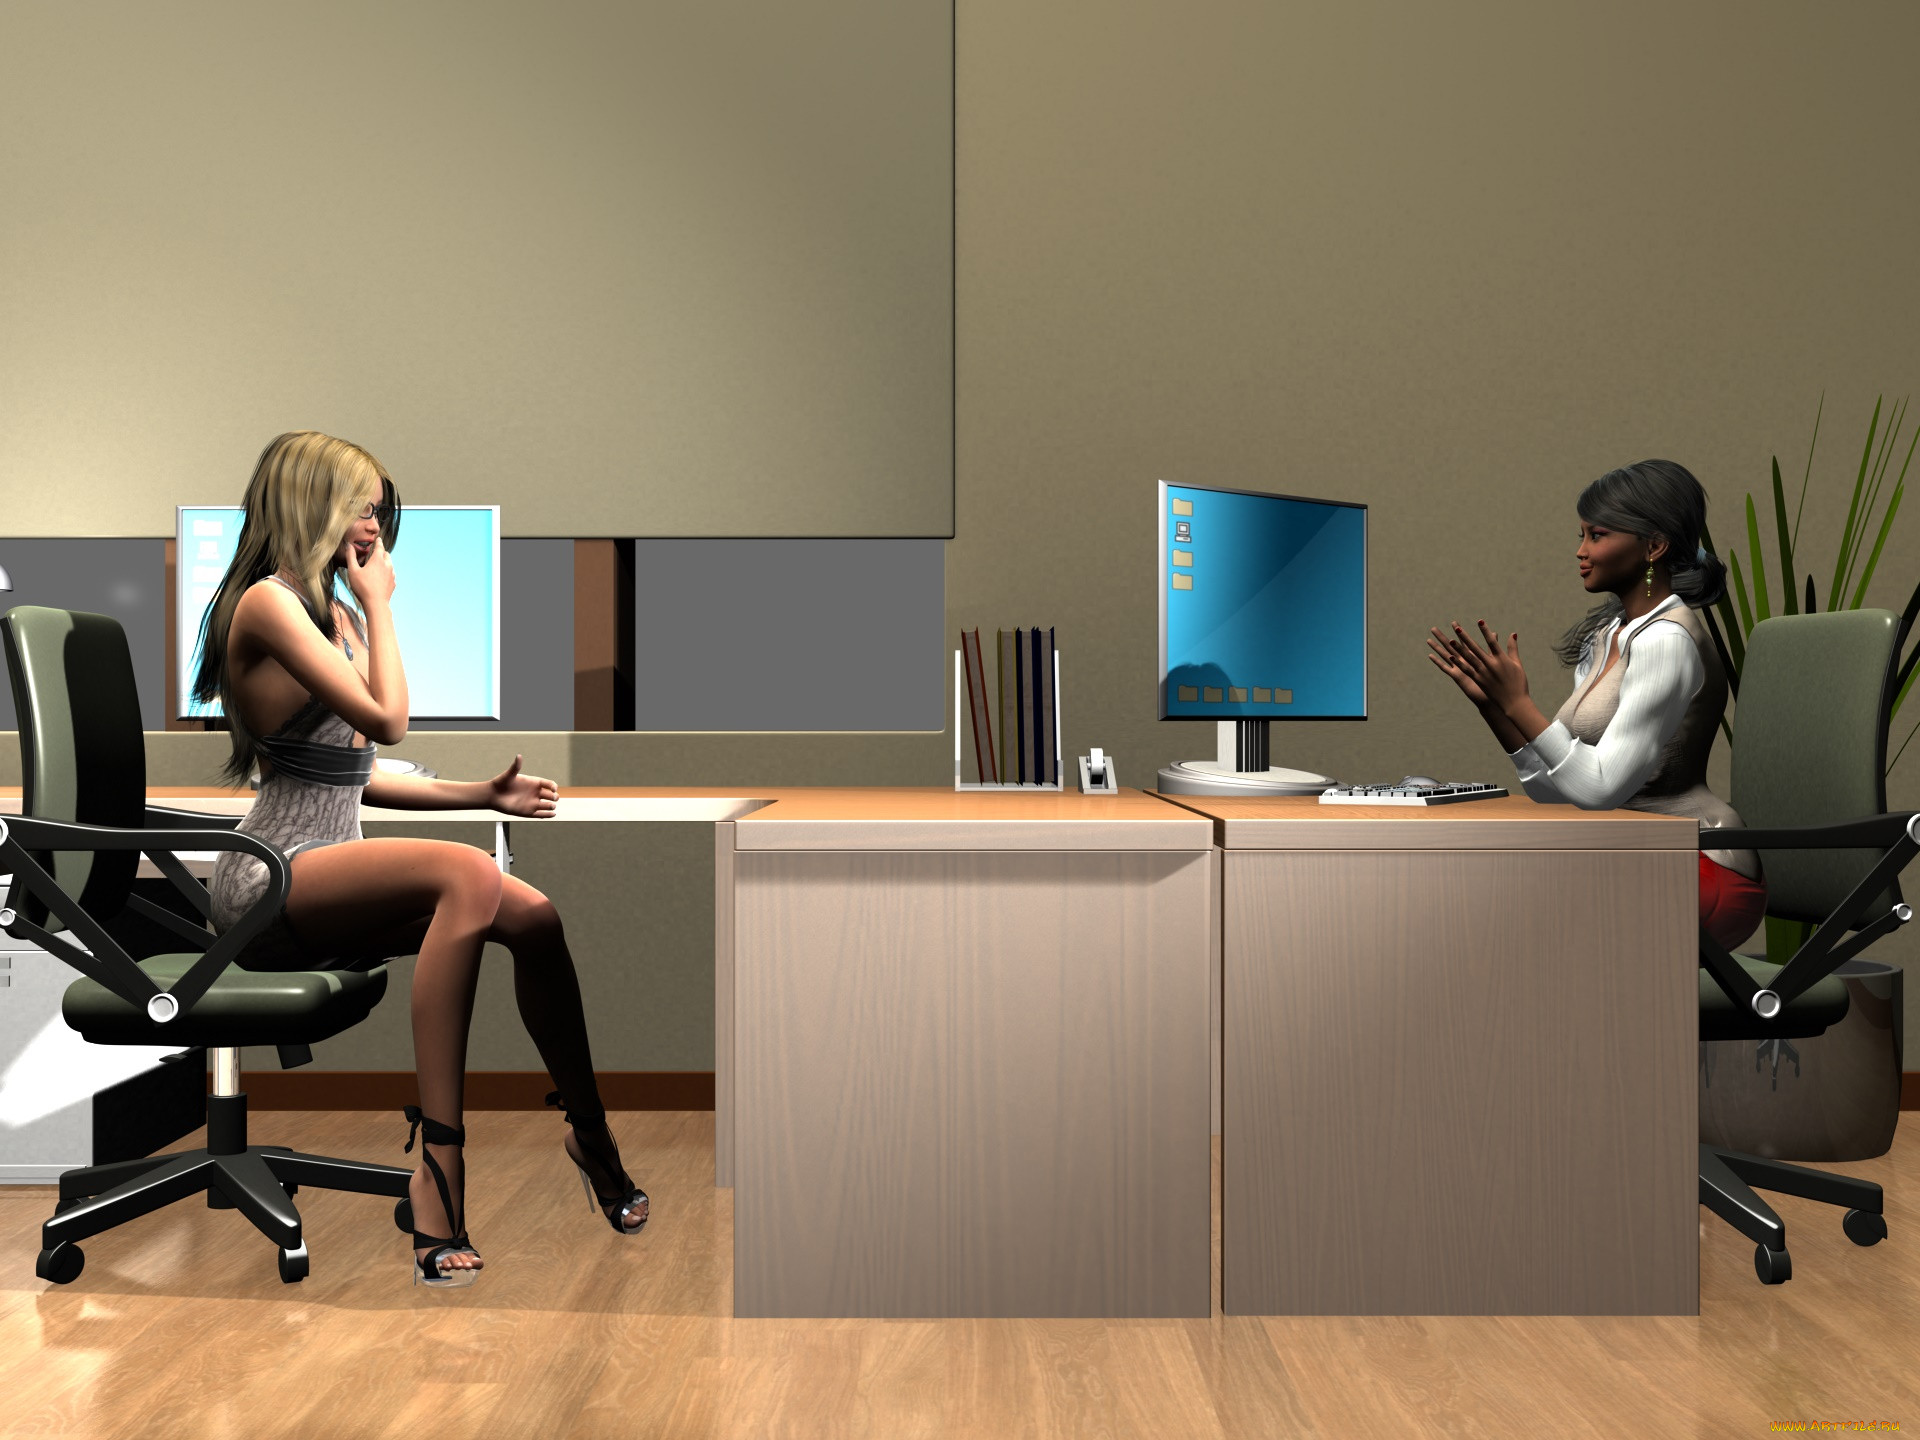 Видео в кабинете 3. Секретарши 3д. Девушка на столе в офисе. Офис кабинет девушка. Три девушки в офисе.